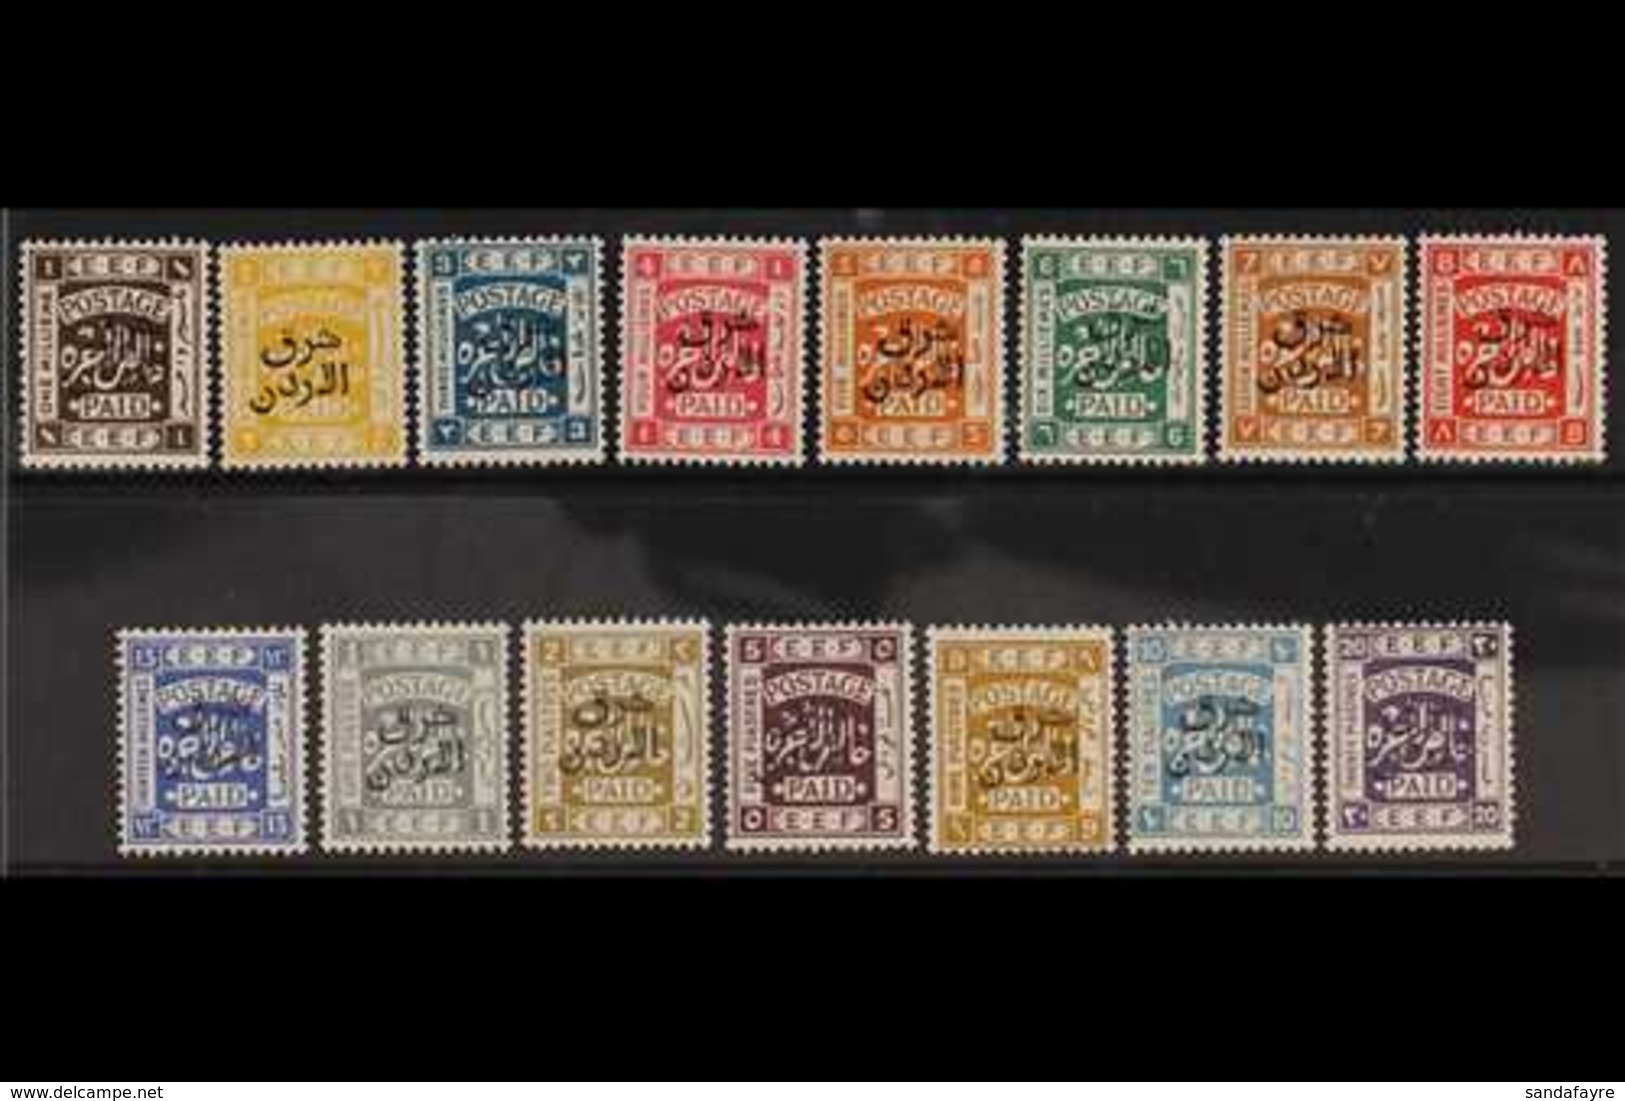 1925-26 "East Of The Jordan" Overprints On Palestine Complete Set, SG 143/57, Very Fine Mint, Very Fresh. (15 Stamps) Fo - Jordan